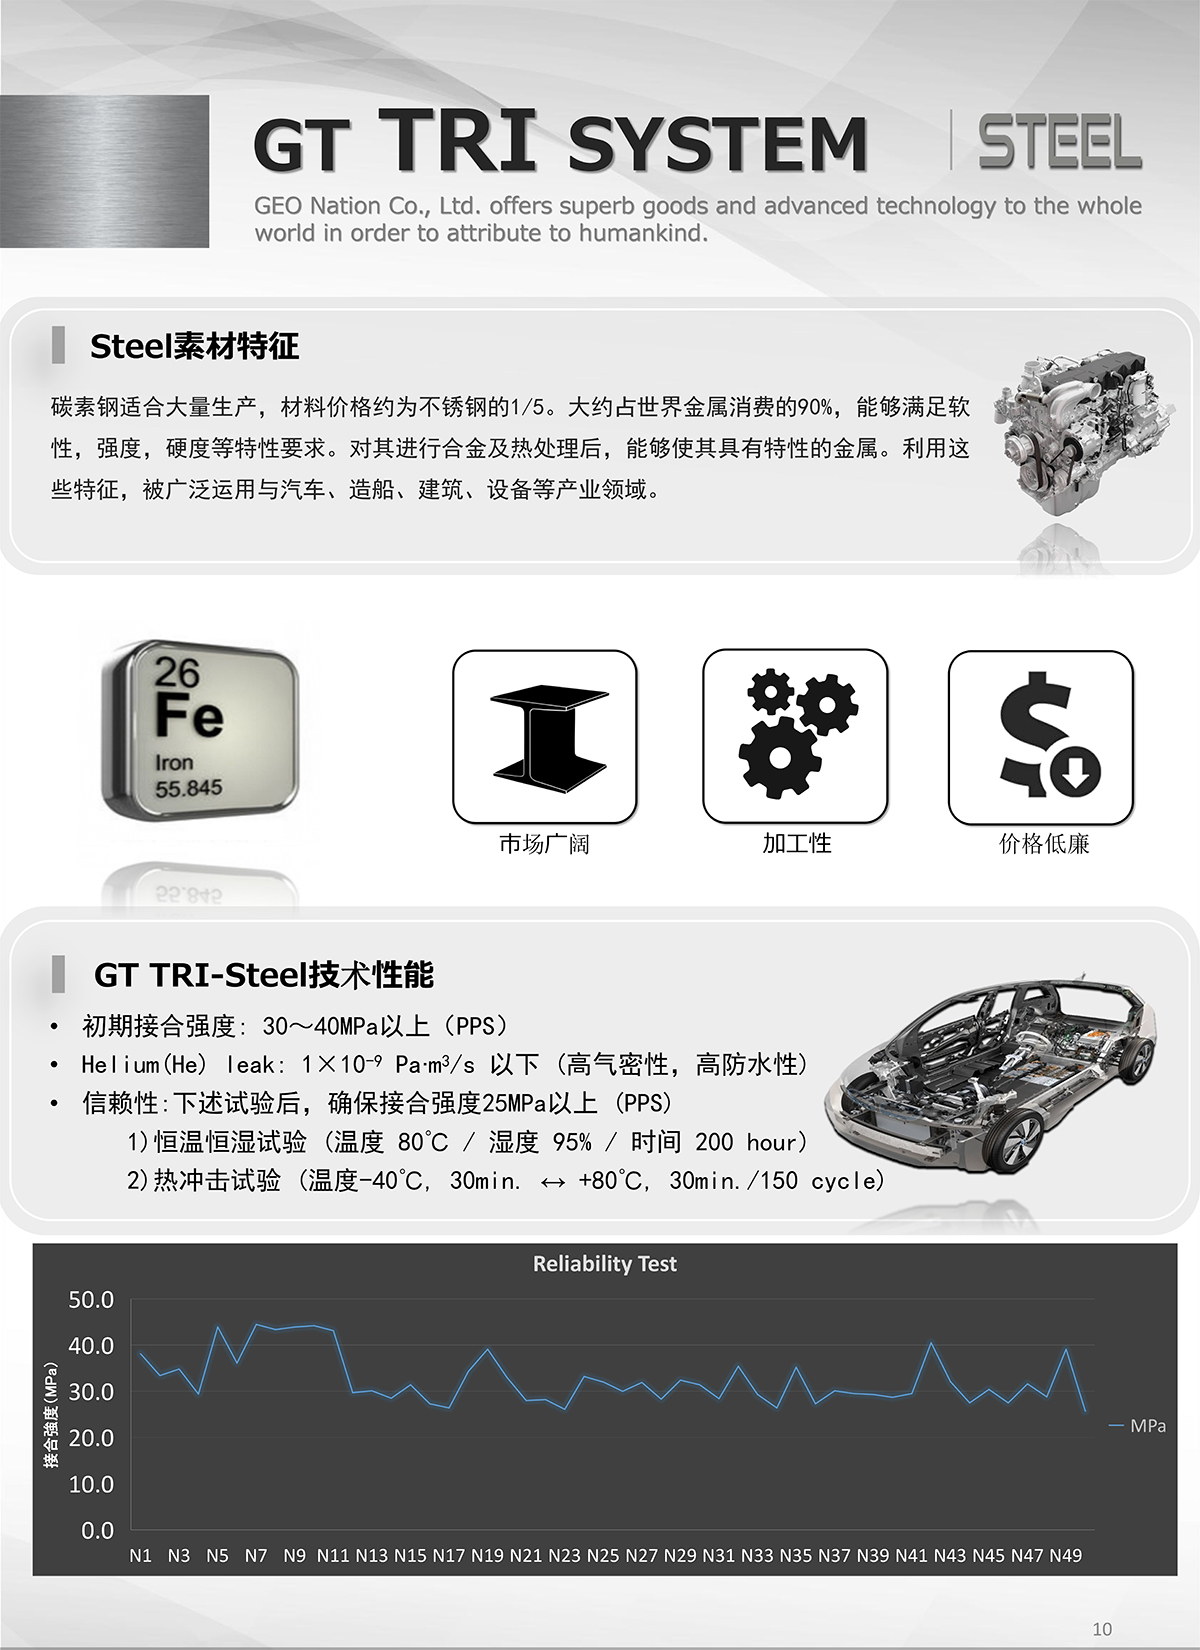 Shenzhen Jinhongxin Technology Co., Ltd.